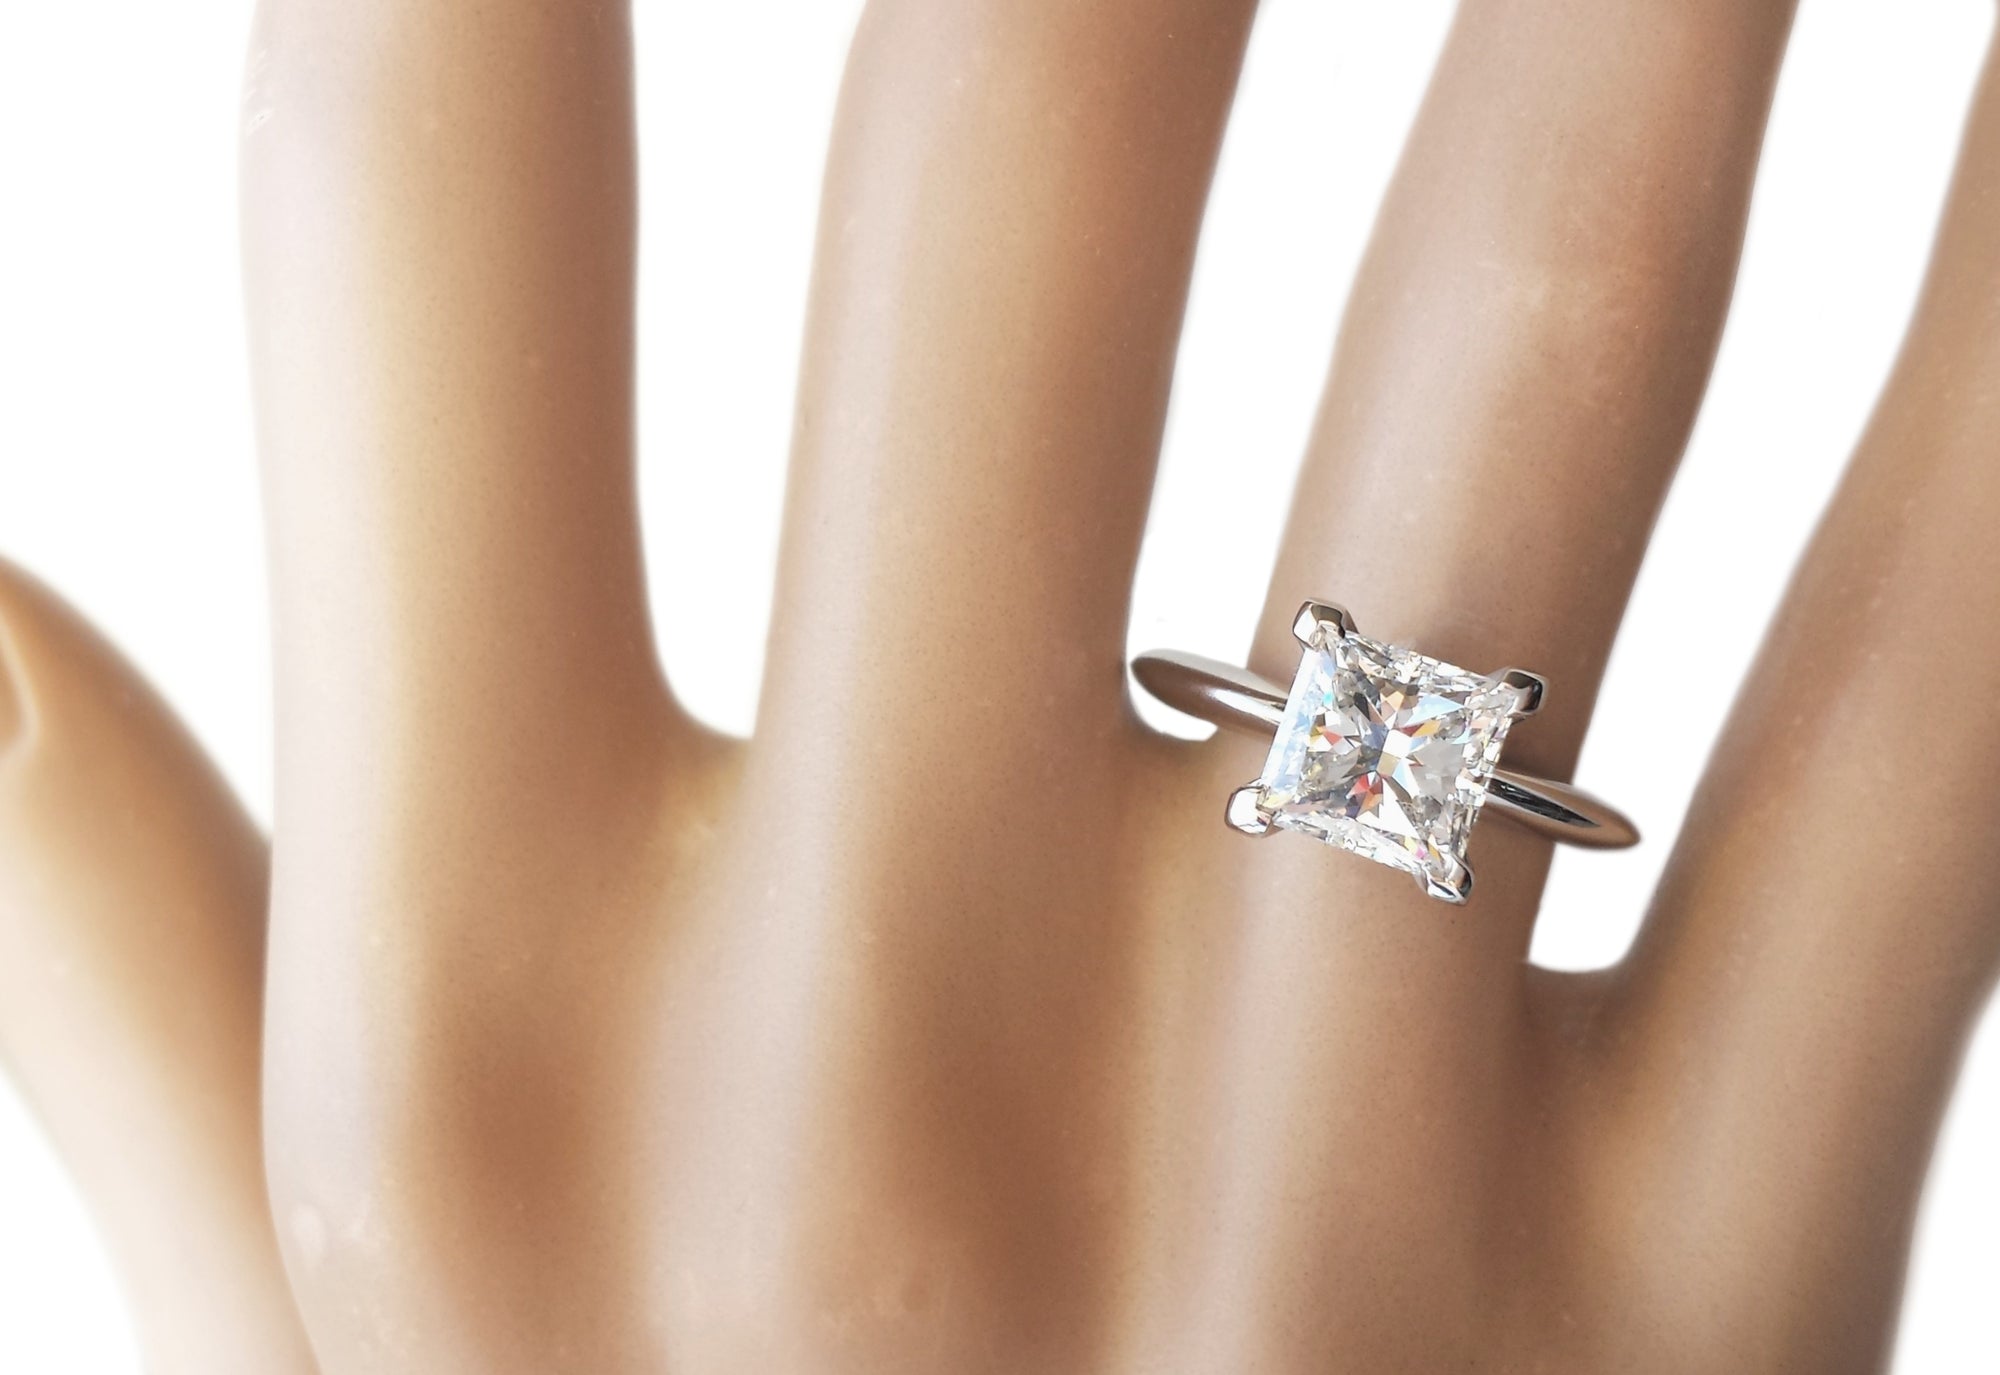 Tiffany & Co. 2.05ct G/VS1 Princess Cut Diamond Engagement Ring on finger